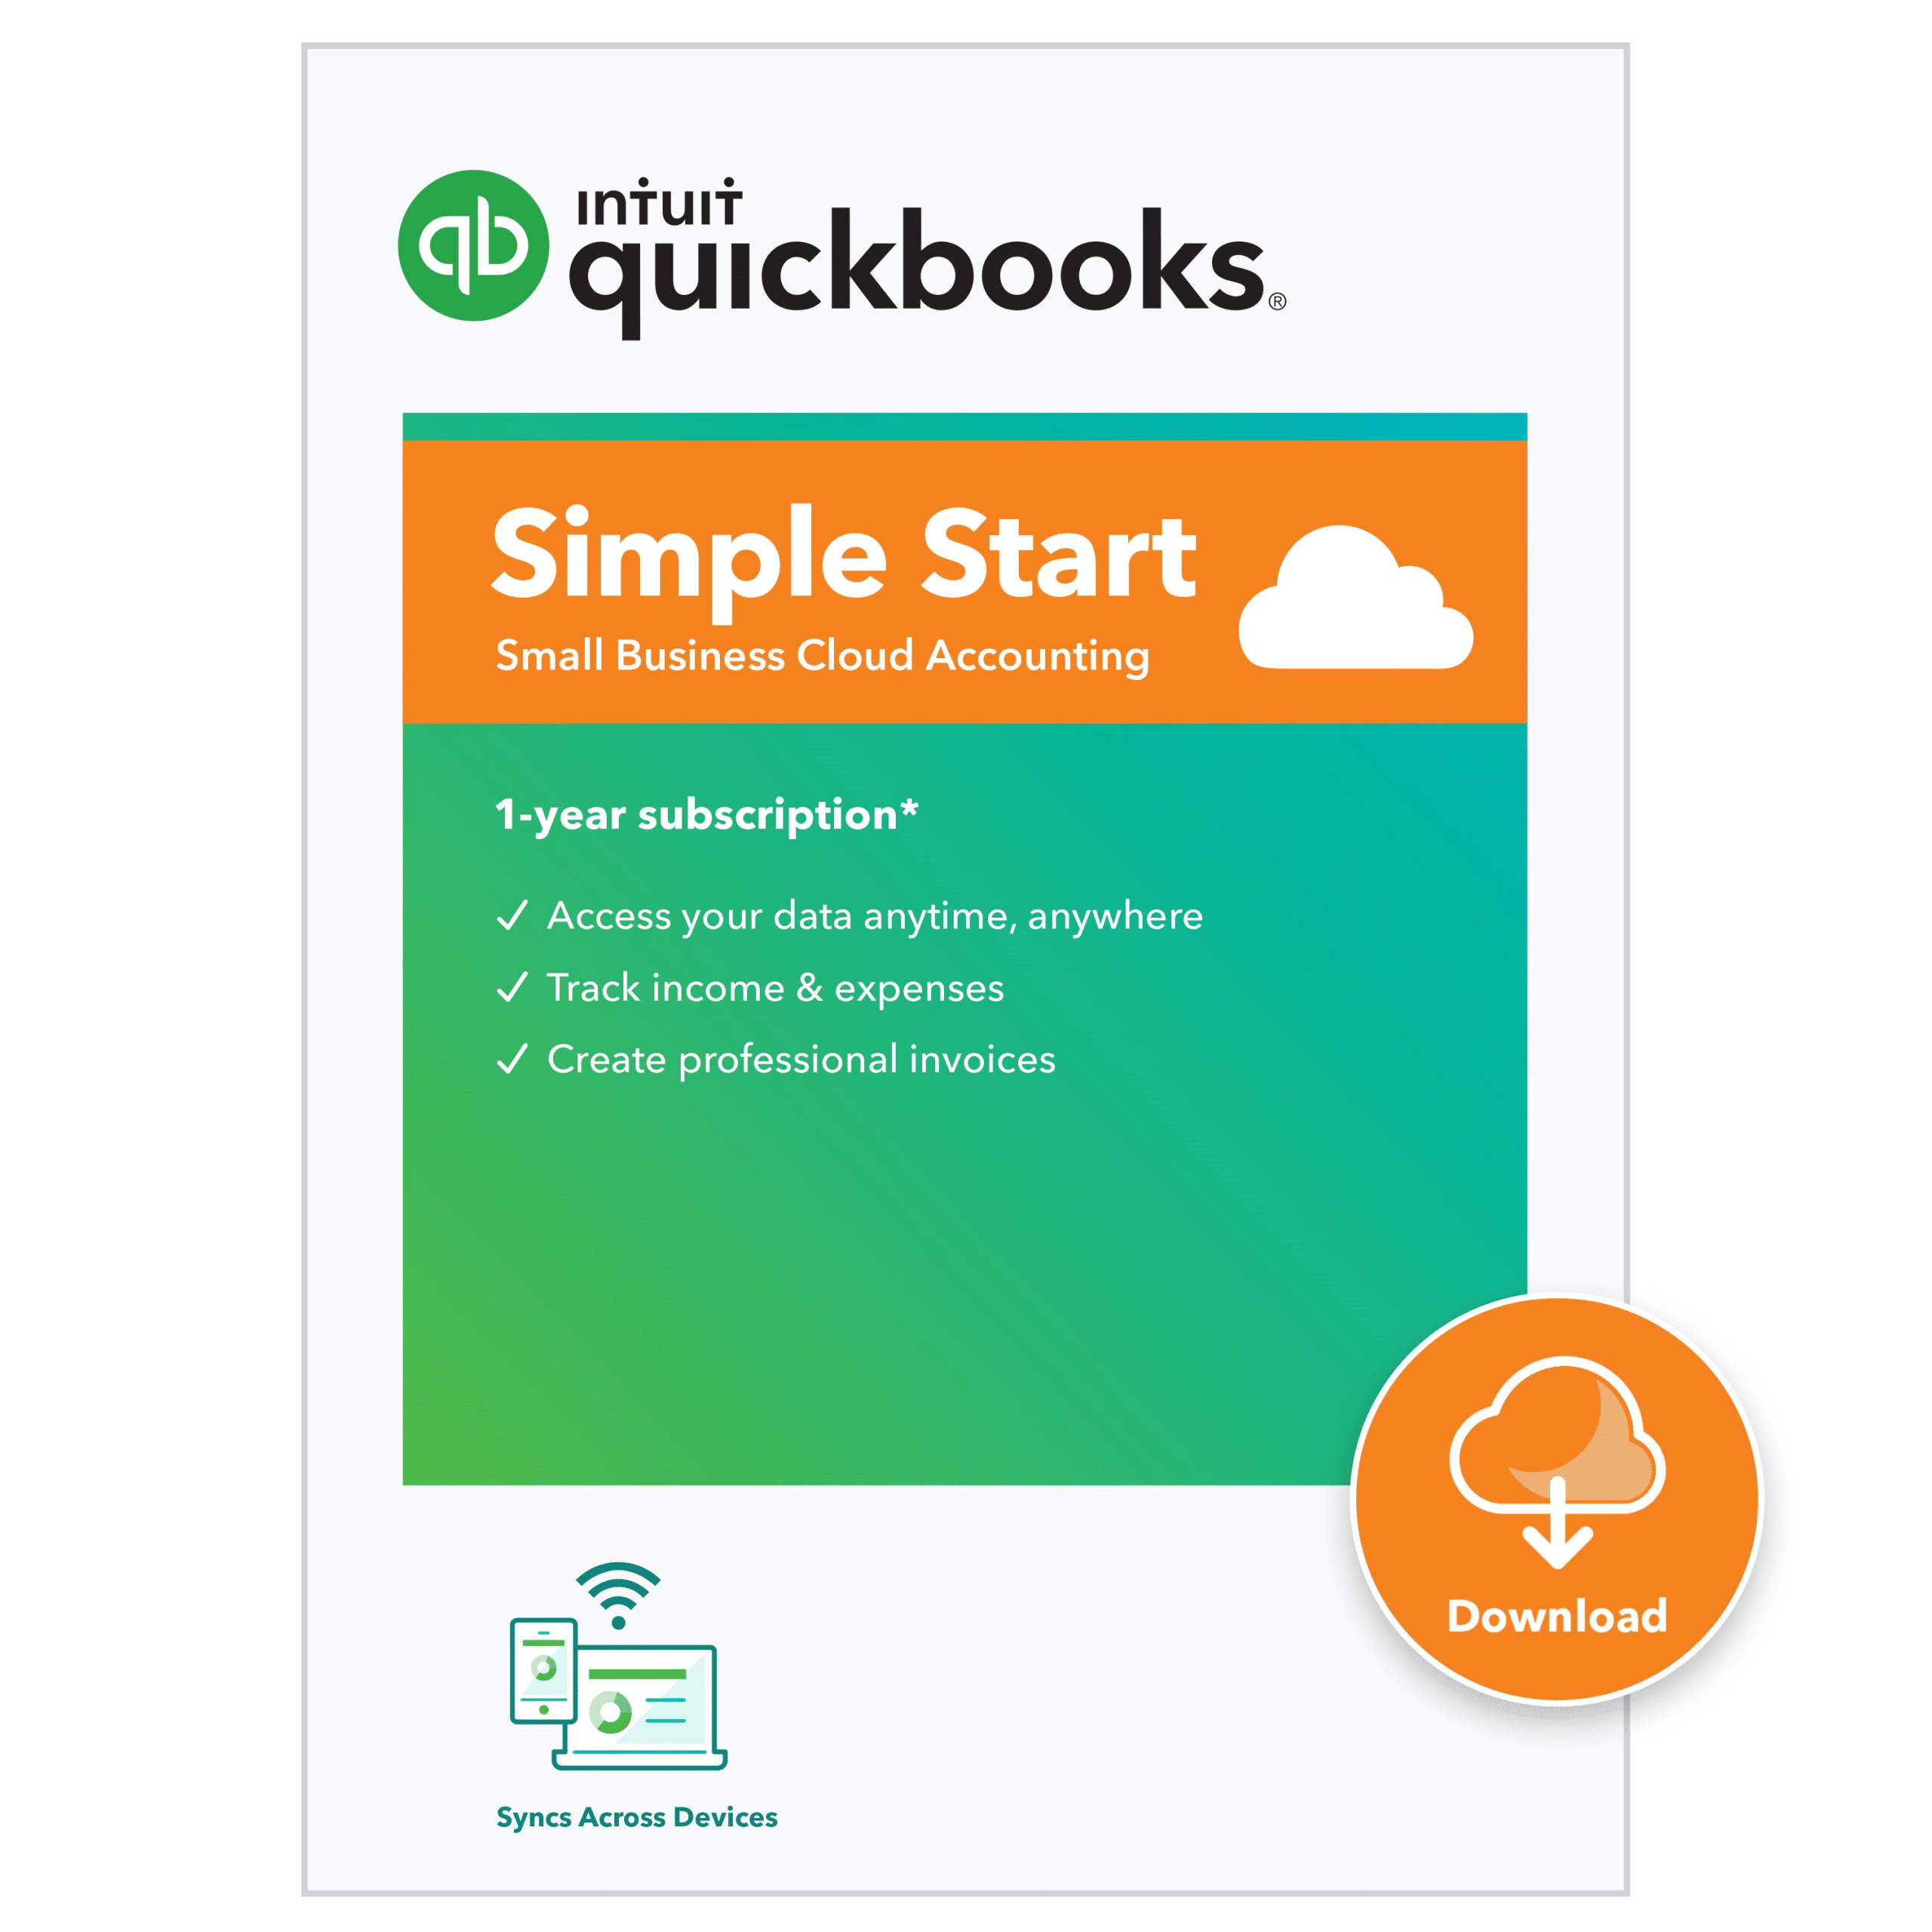 QuickBooks Online Simple Start